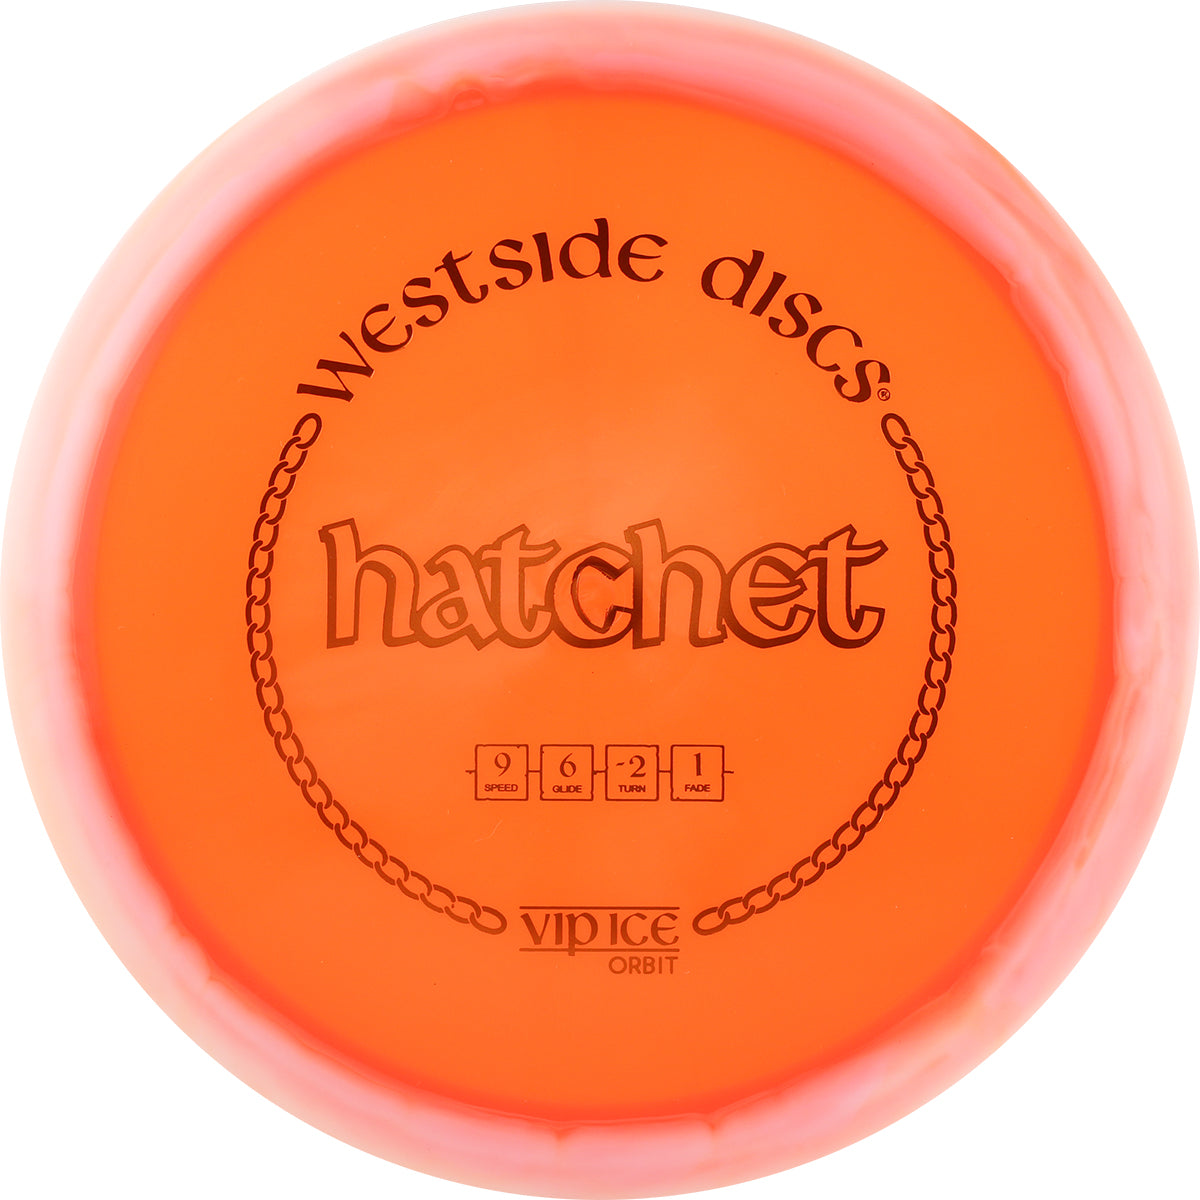 VIP-Ice Orbit Hatchet